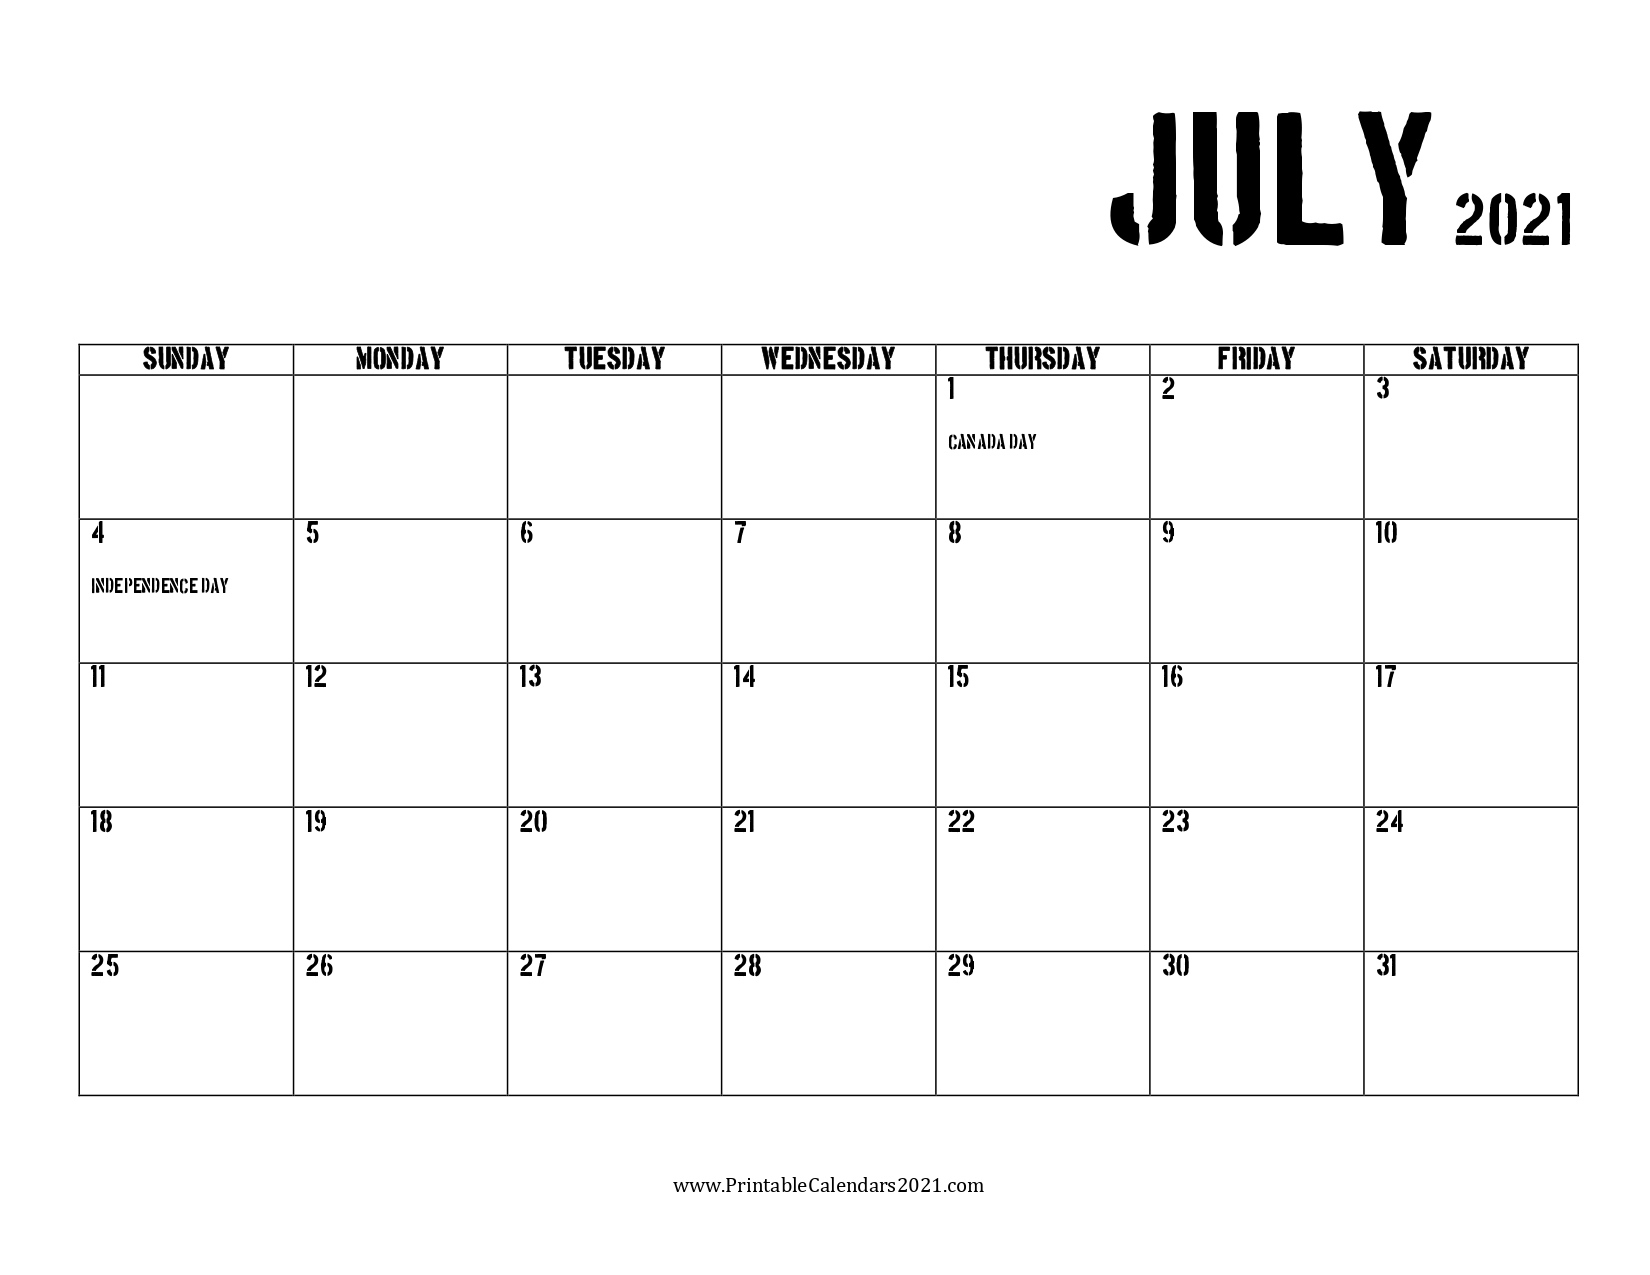 45+ July 2021 Calendar Printable, July 2021 Calendar Pdf, Blank, Free Online Calendar July 2021